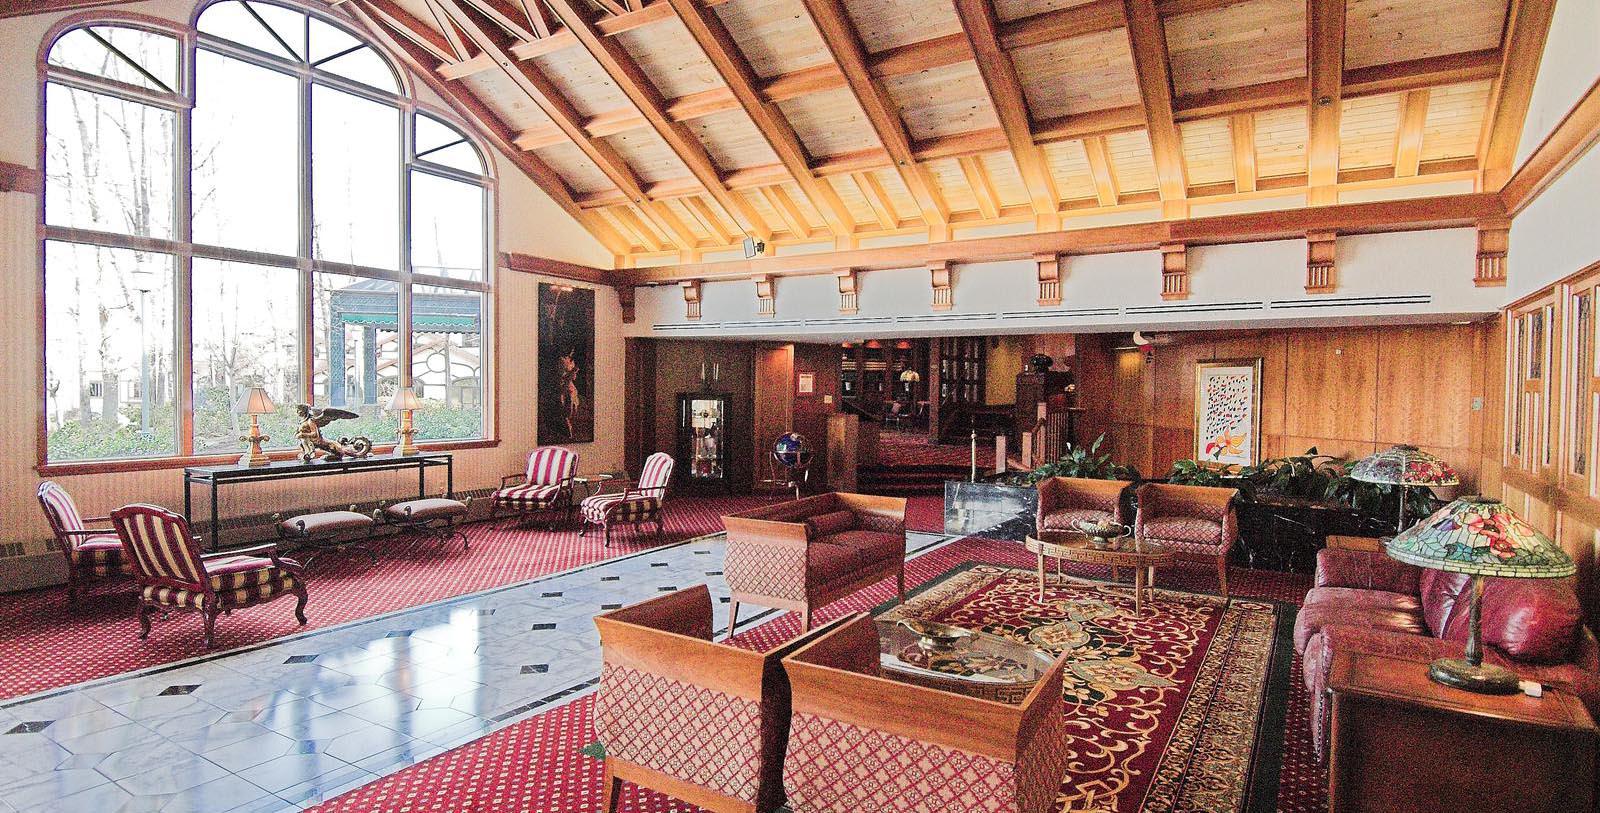 The Lodge at Nemacolin Woodlands Resort